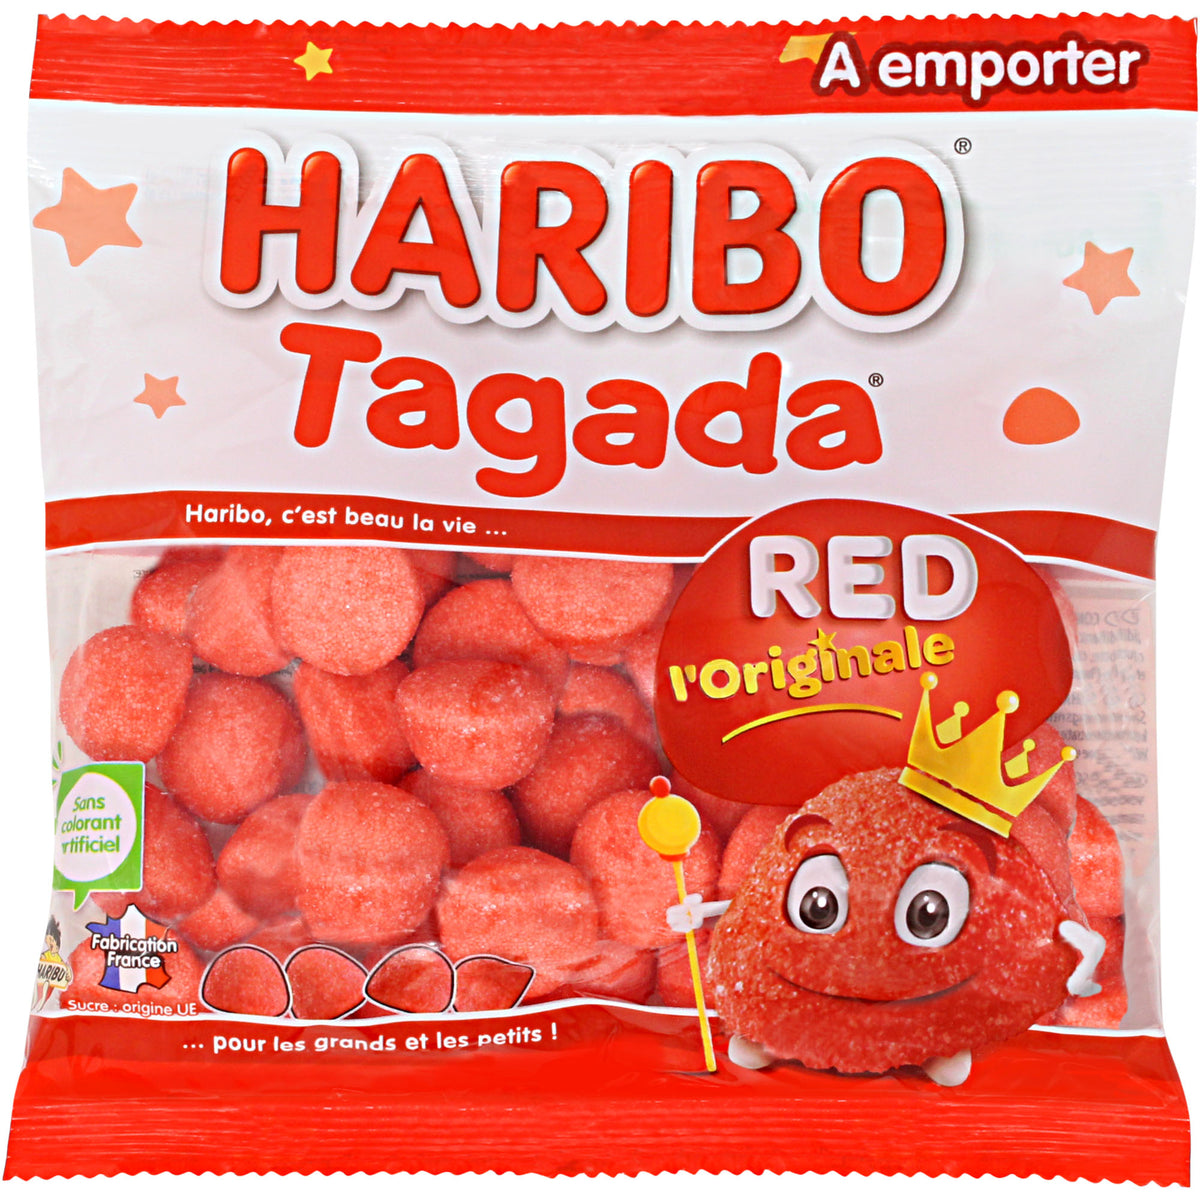 Strawberry tagada HARIBO red red key holder 10 cm - S